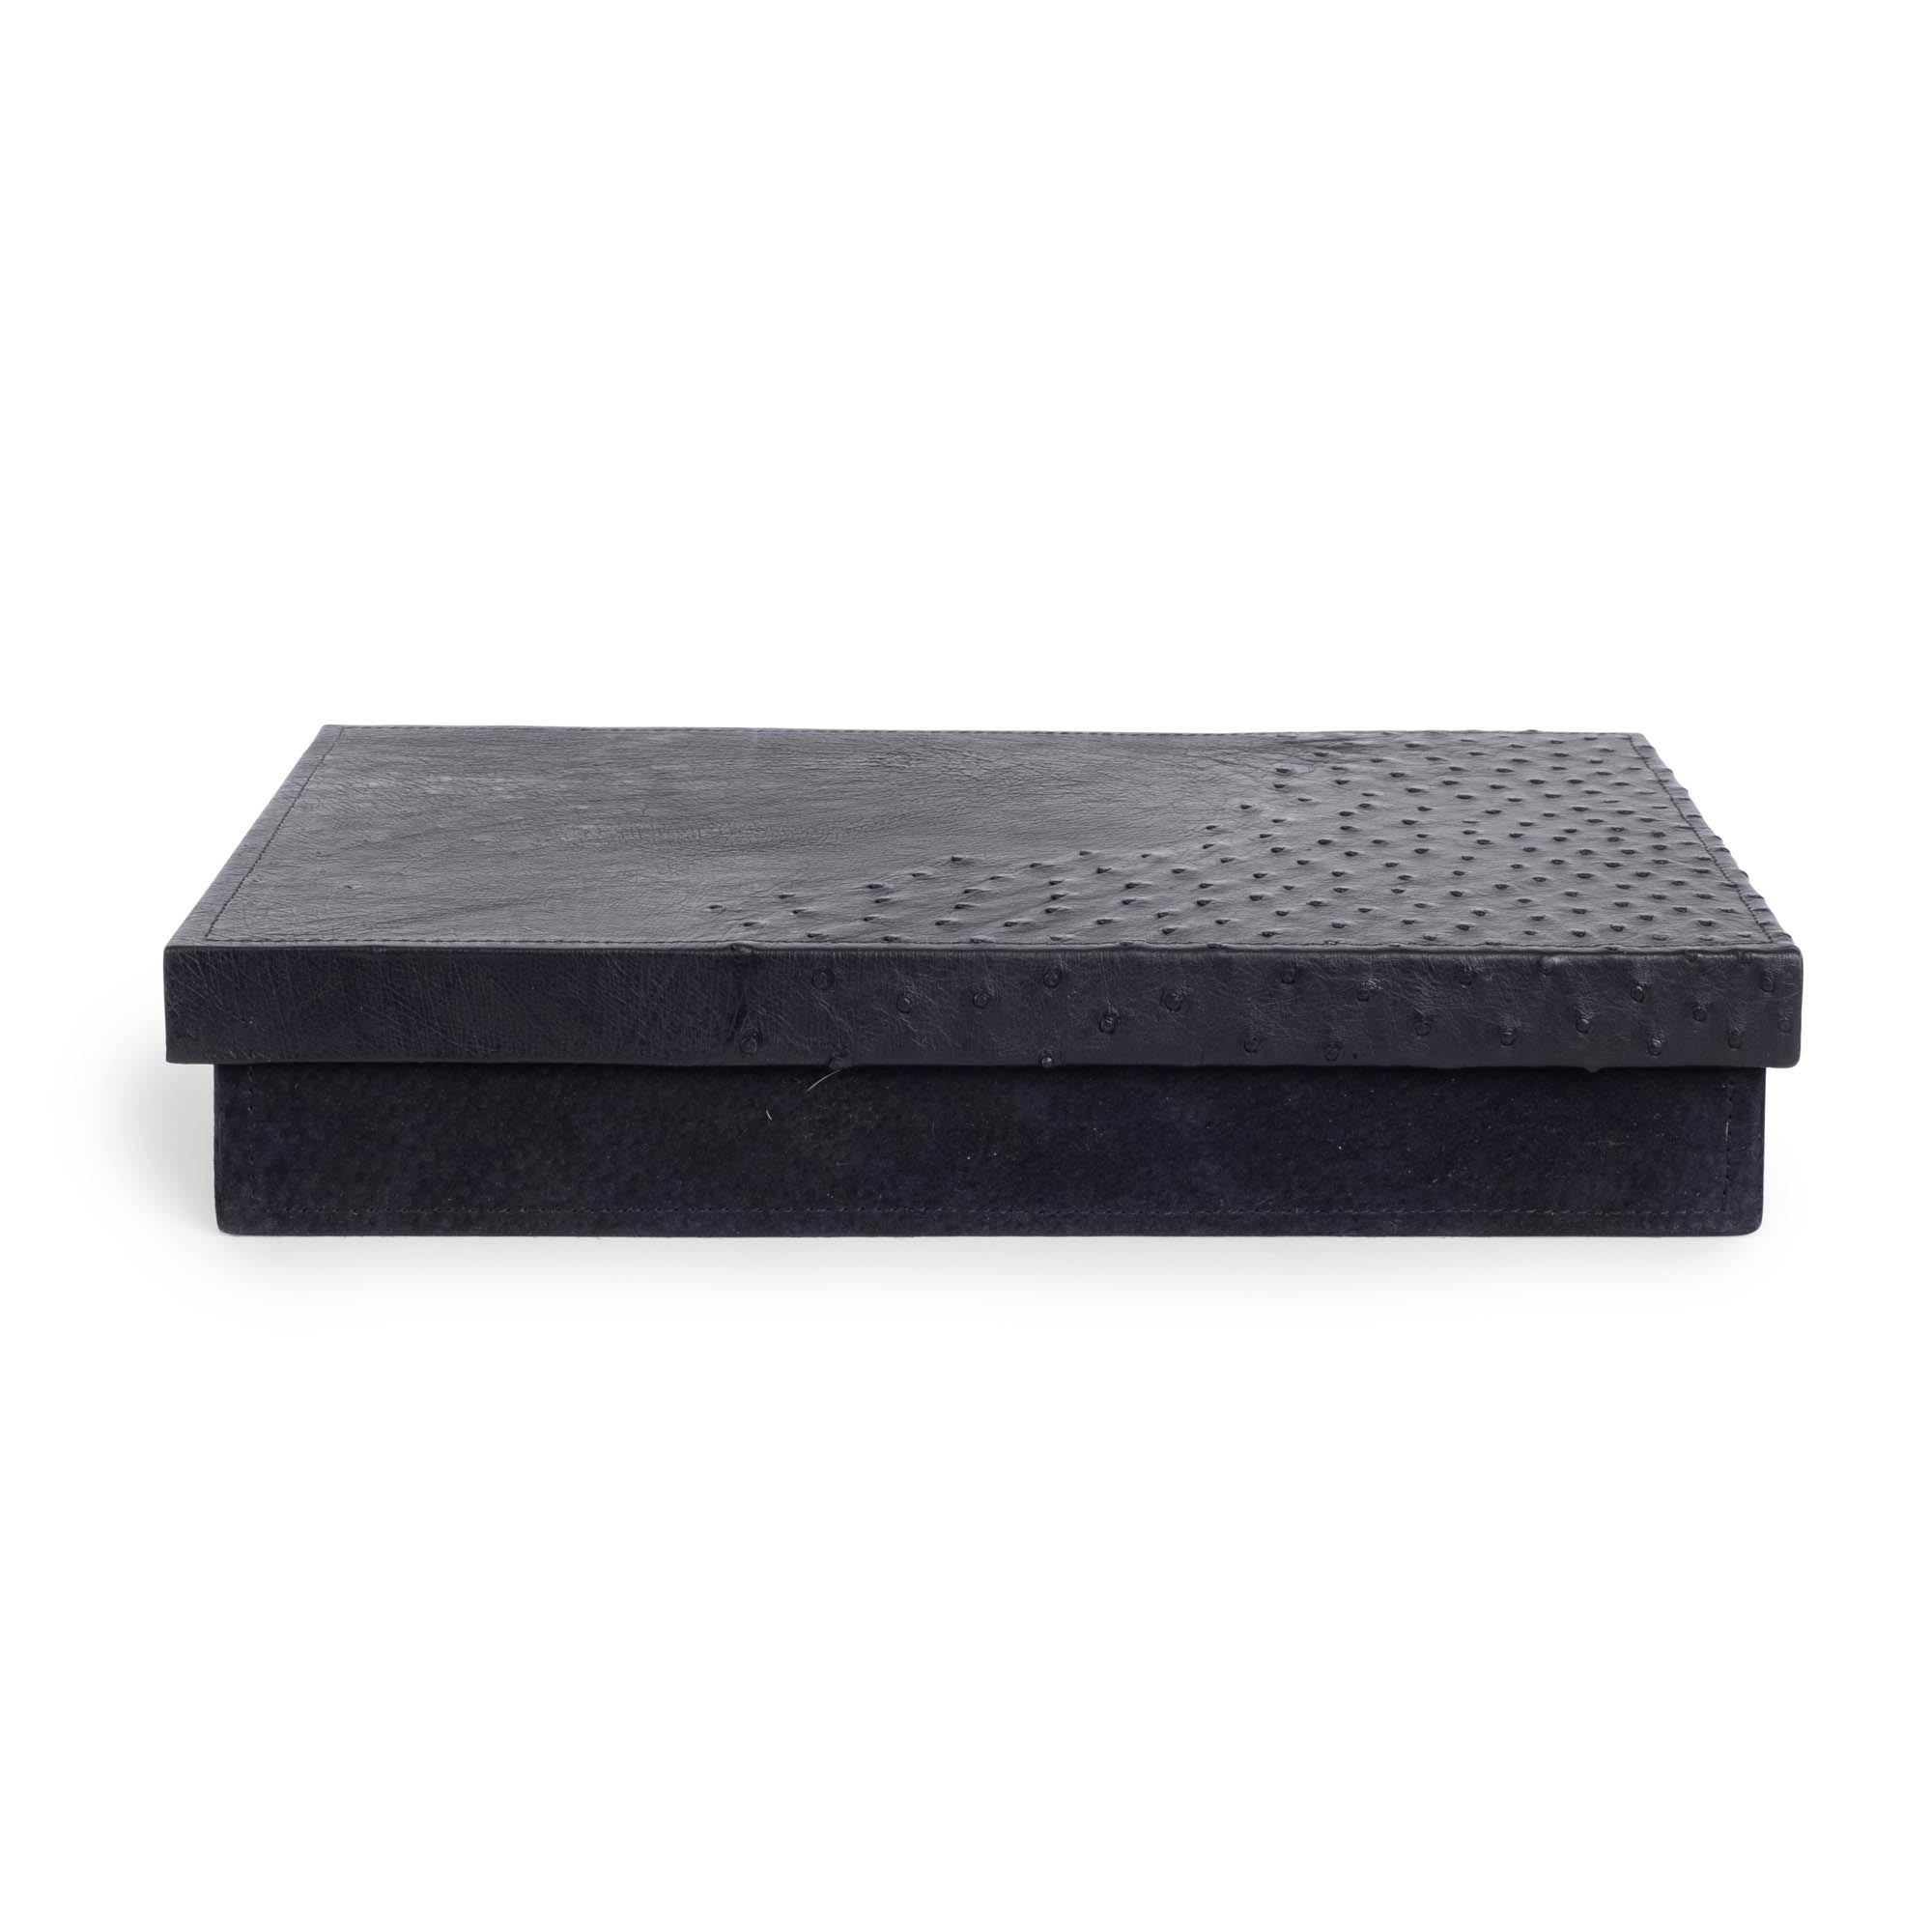 Desk Organizer Box - Ostrich Leather/Suede - Black